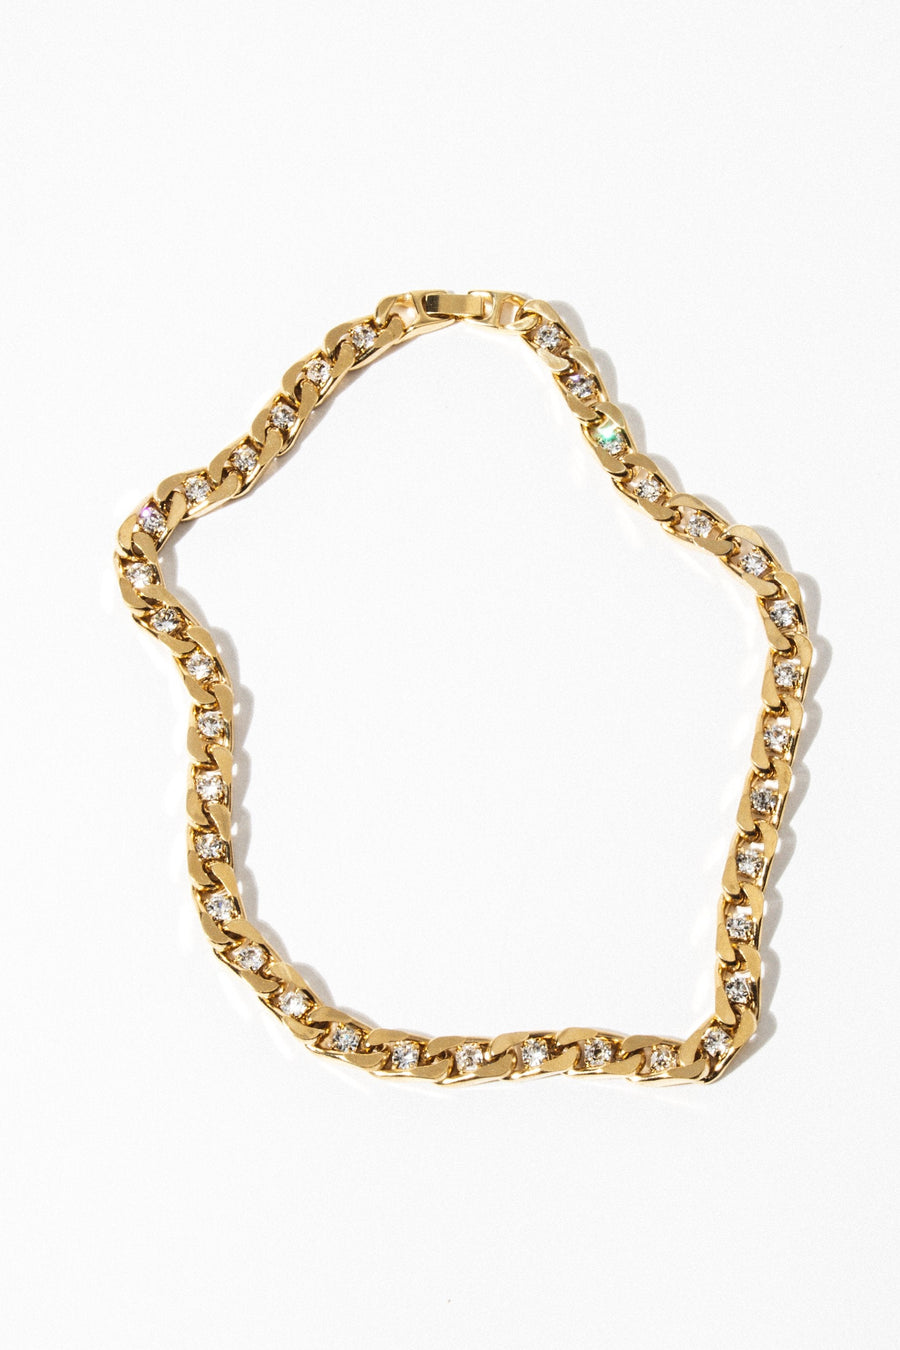 Goddess Jewelry Gold A Palm Springs Story Necklace